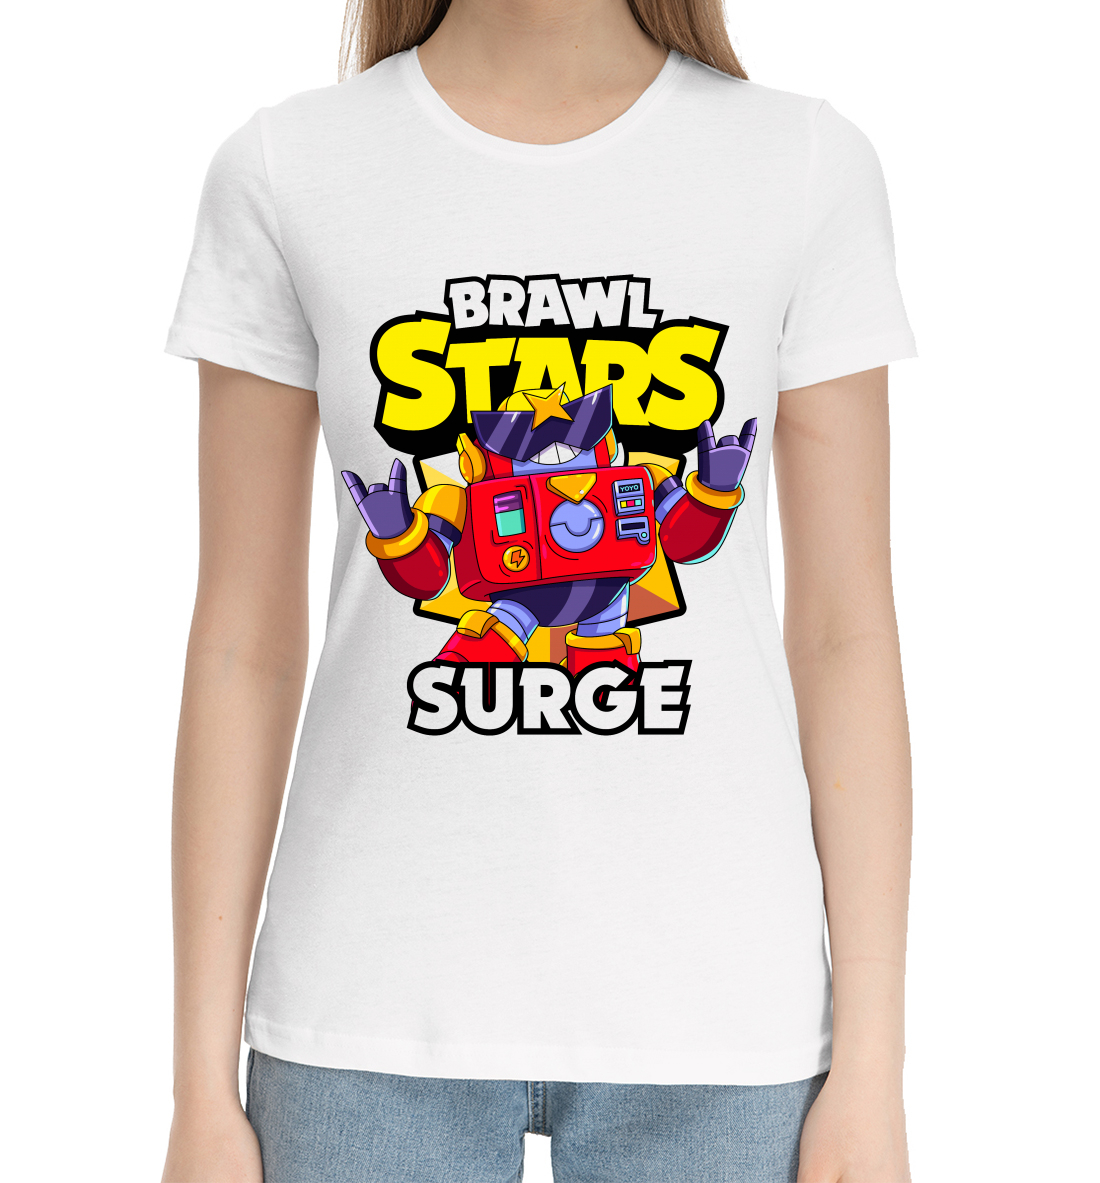 Женская Хлопковая футболка с принтом Brawl Stars, Surge, артикул CLH-418828-hfu-1mp